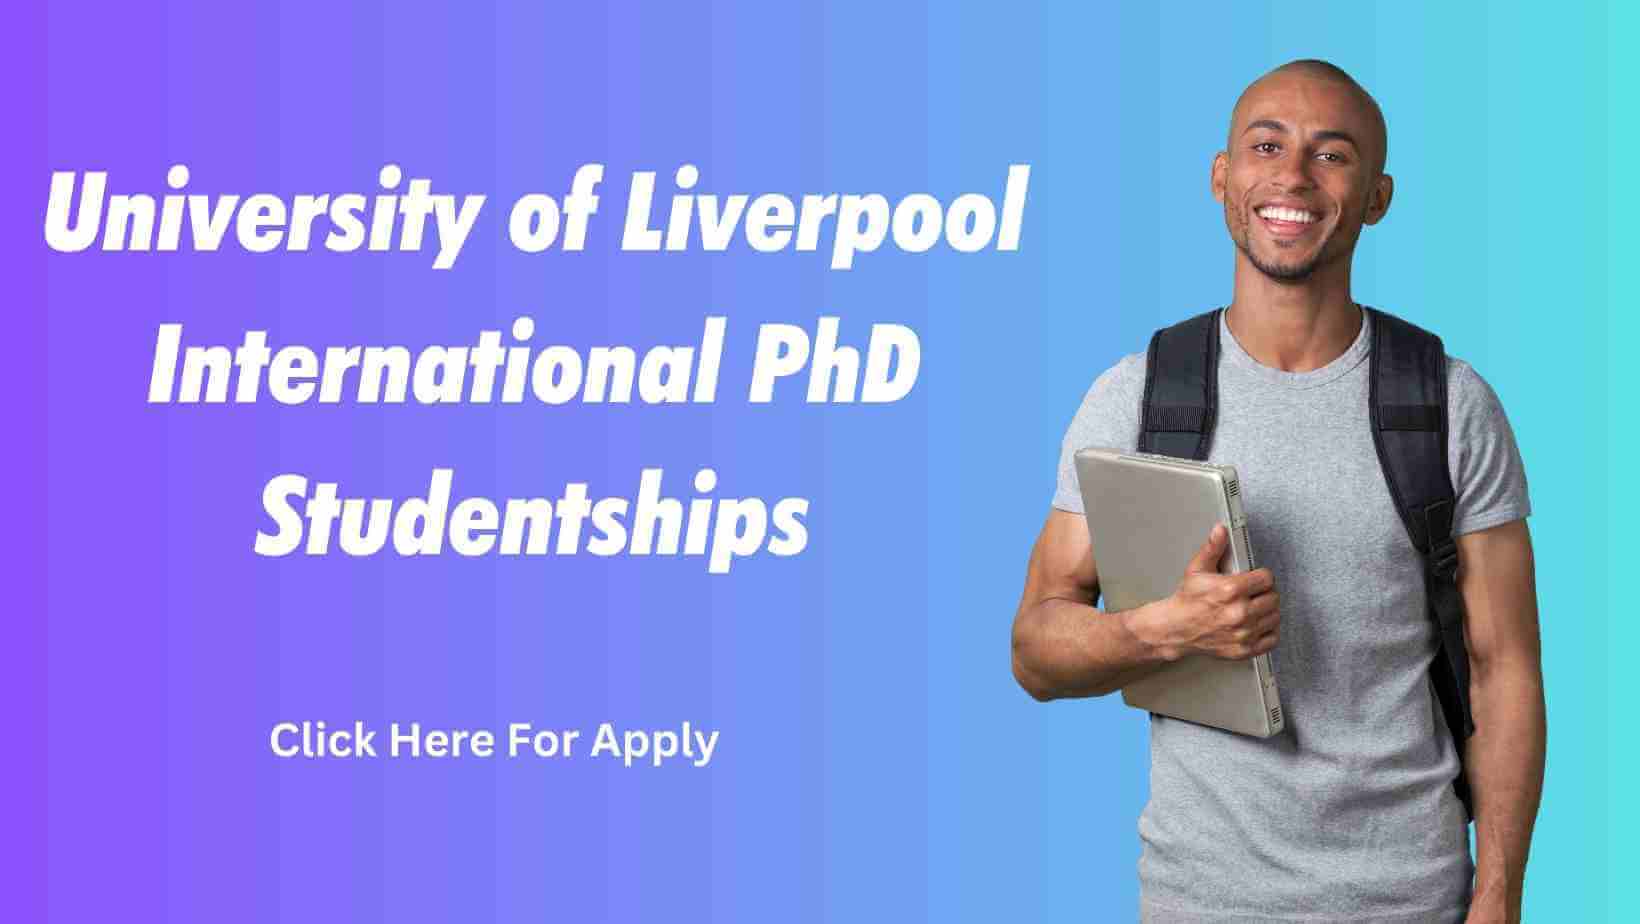 University of Liverpool International PhD Studentships